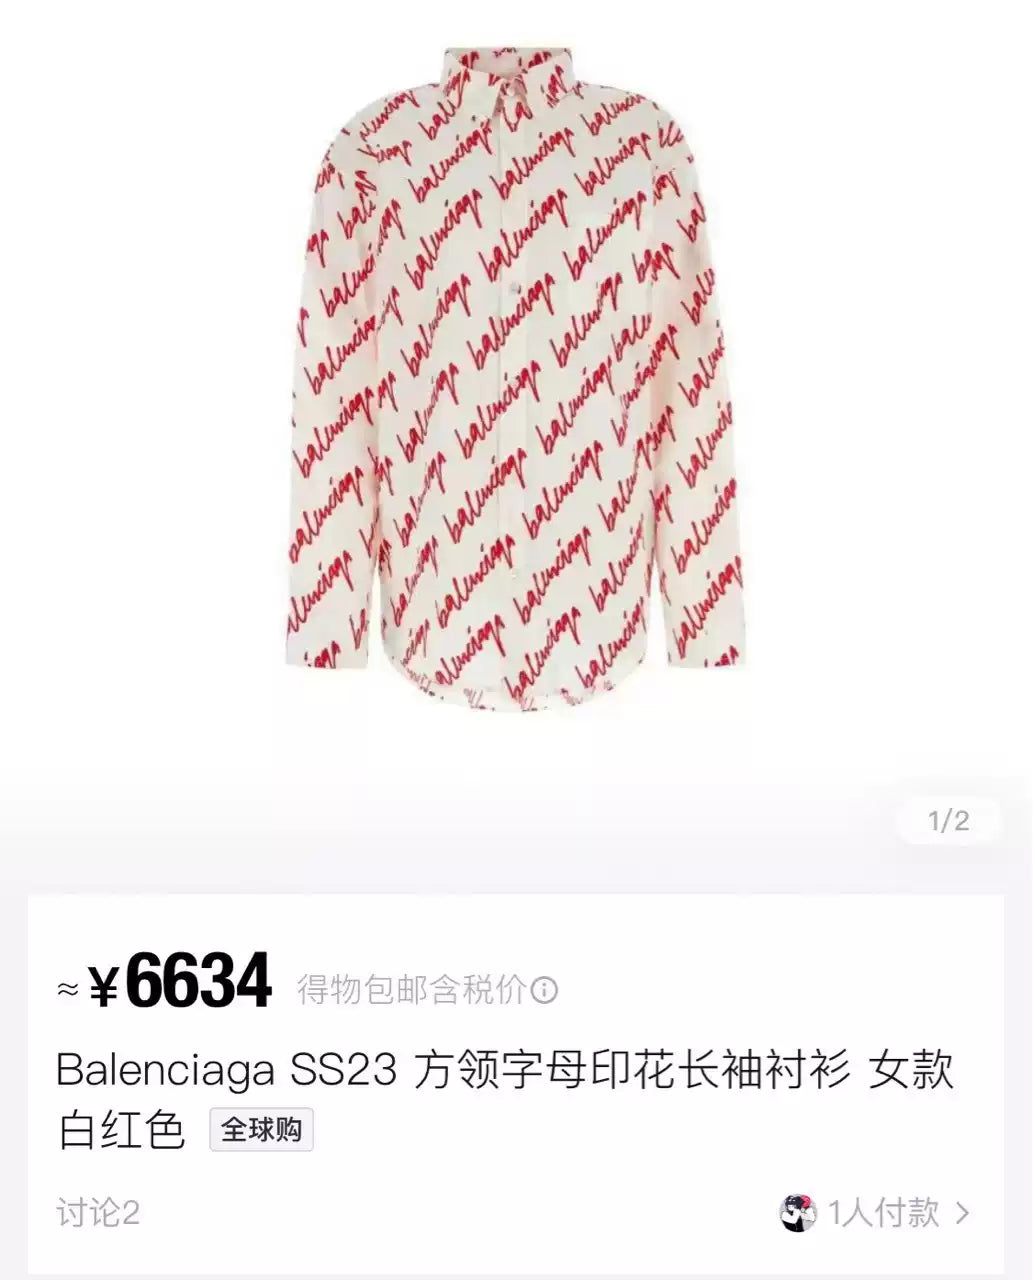 Balenciaga SS23 New Full Print Grass Script Logo Printed Long sleeved Shirt